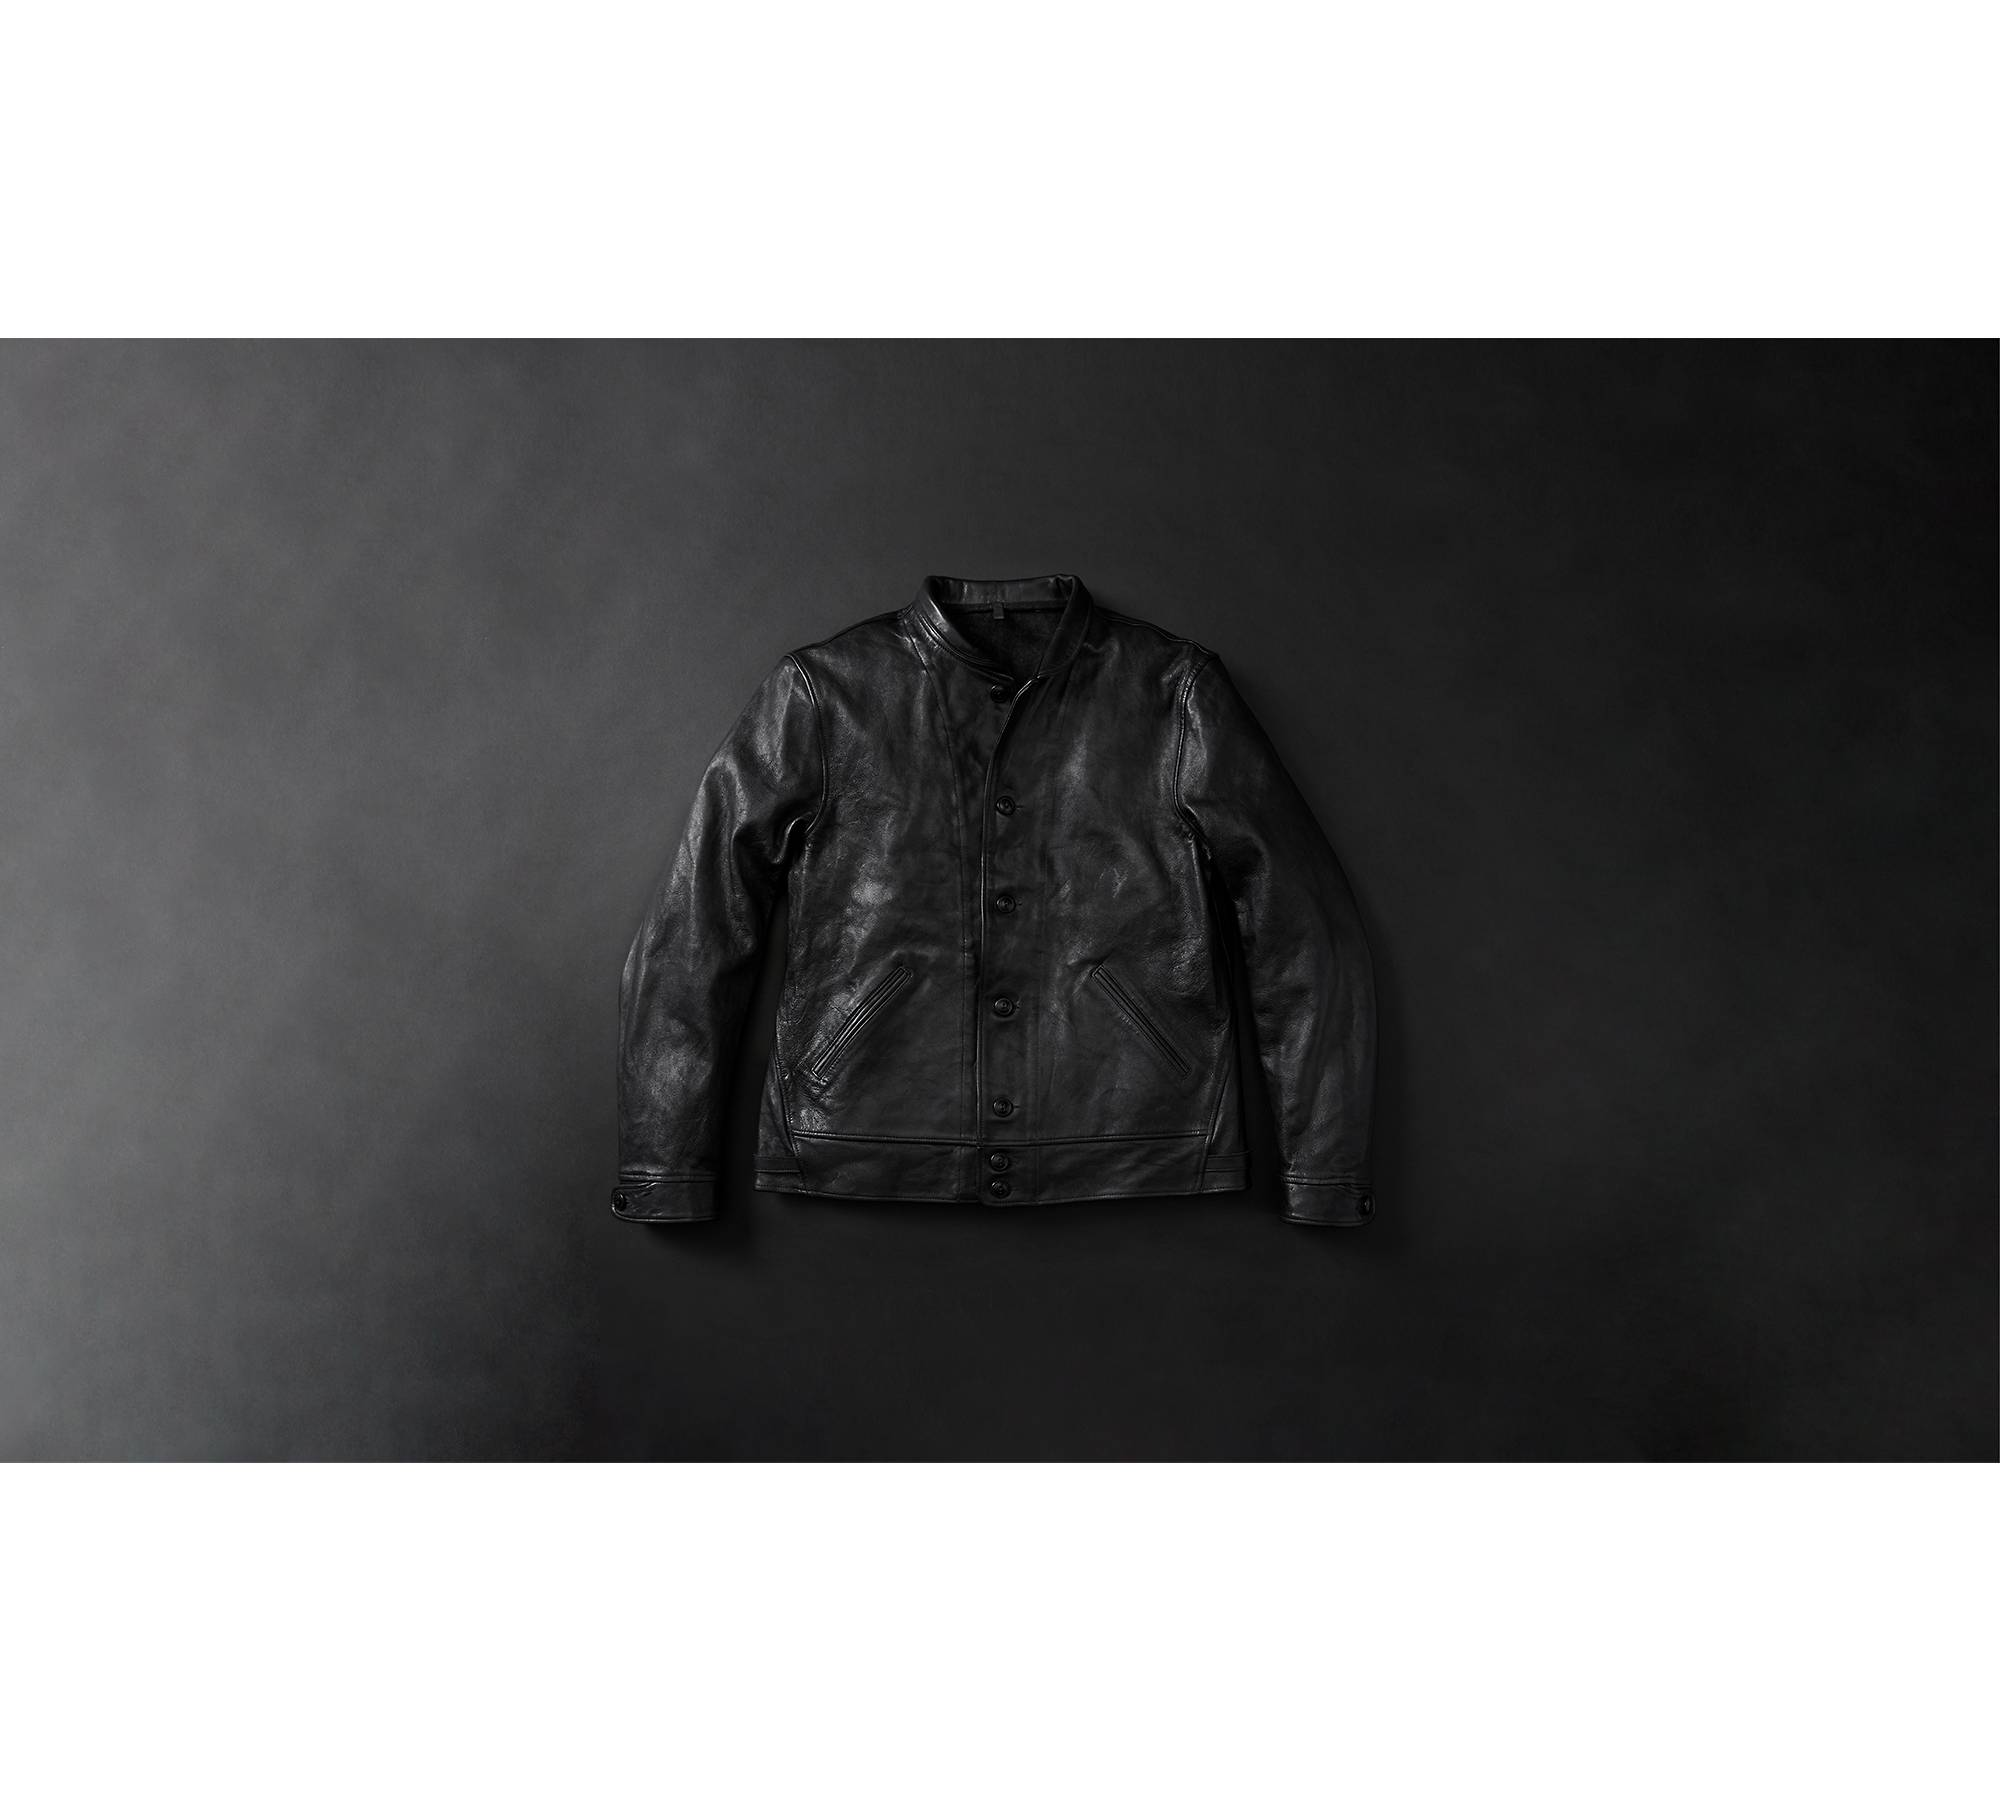 Levi's Has Reproduced Albert Einstein's Original Leather Jacket